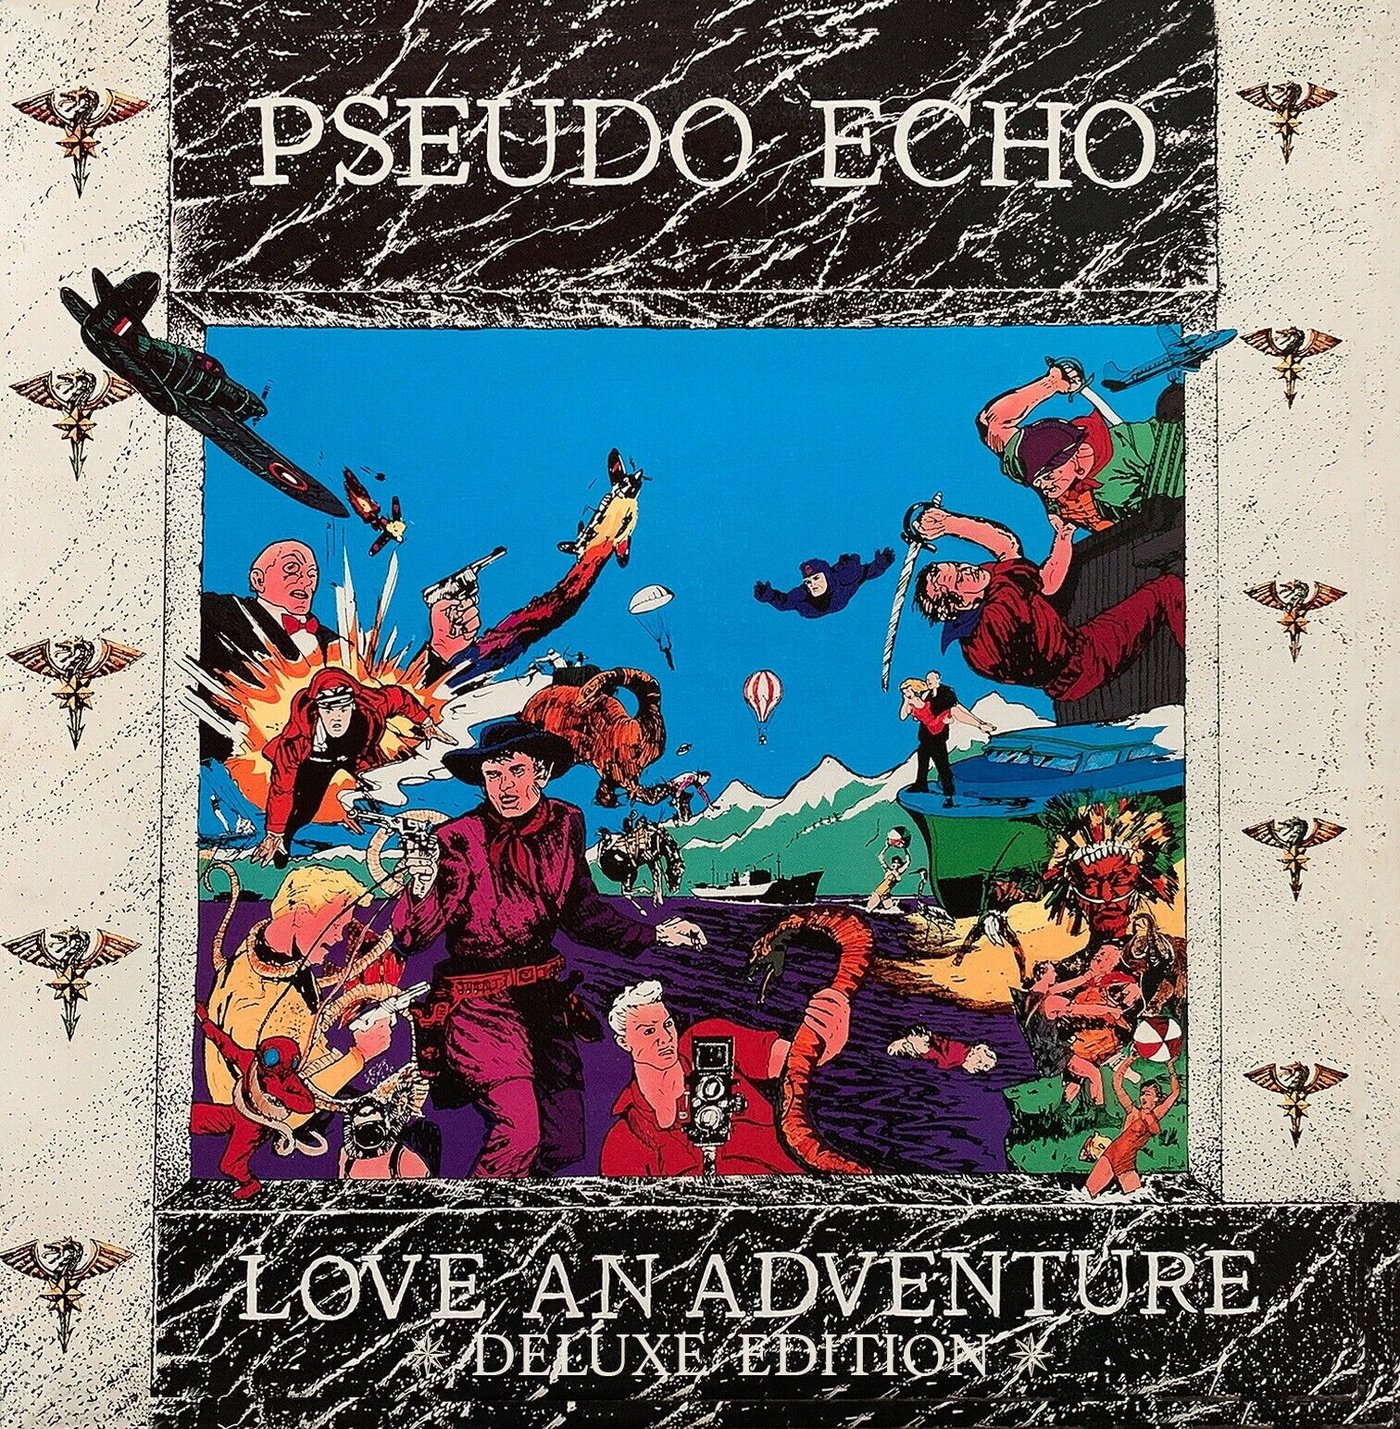 PSEUDO ECHO “LOVE AN ADVENTURE” DELUXE EDITION ALBUM ON CD + 8 BONUS TRACKS